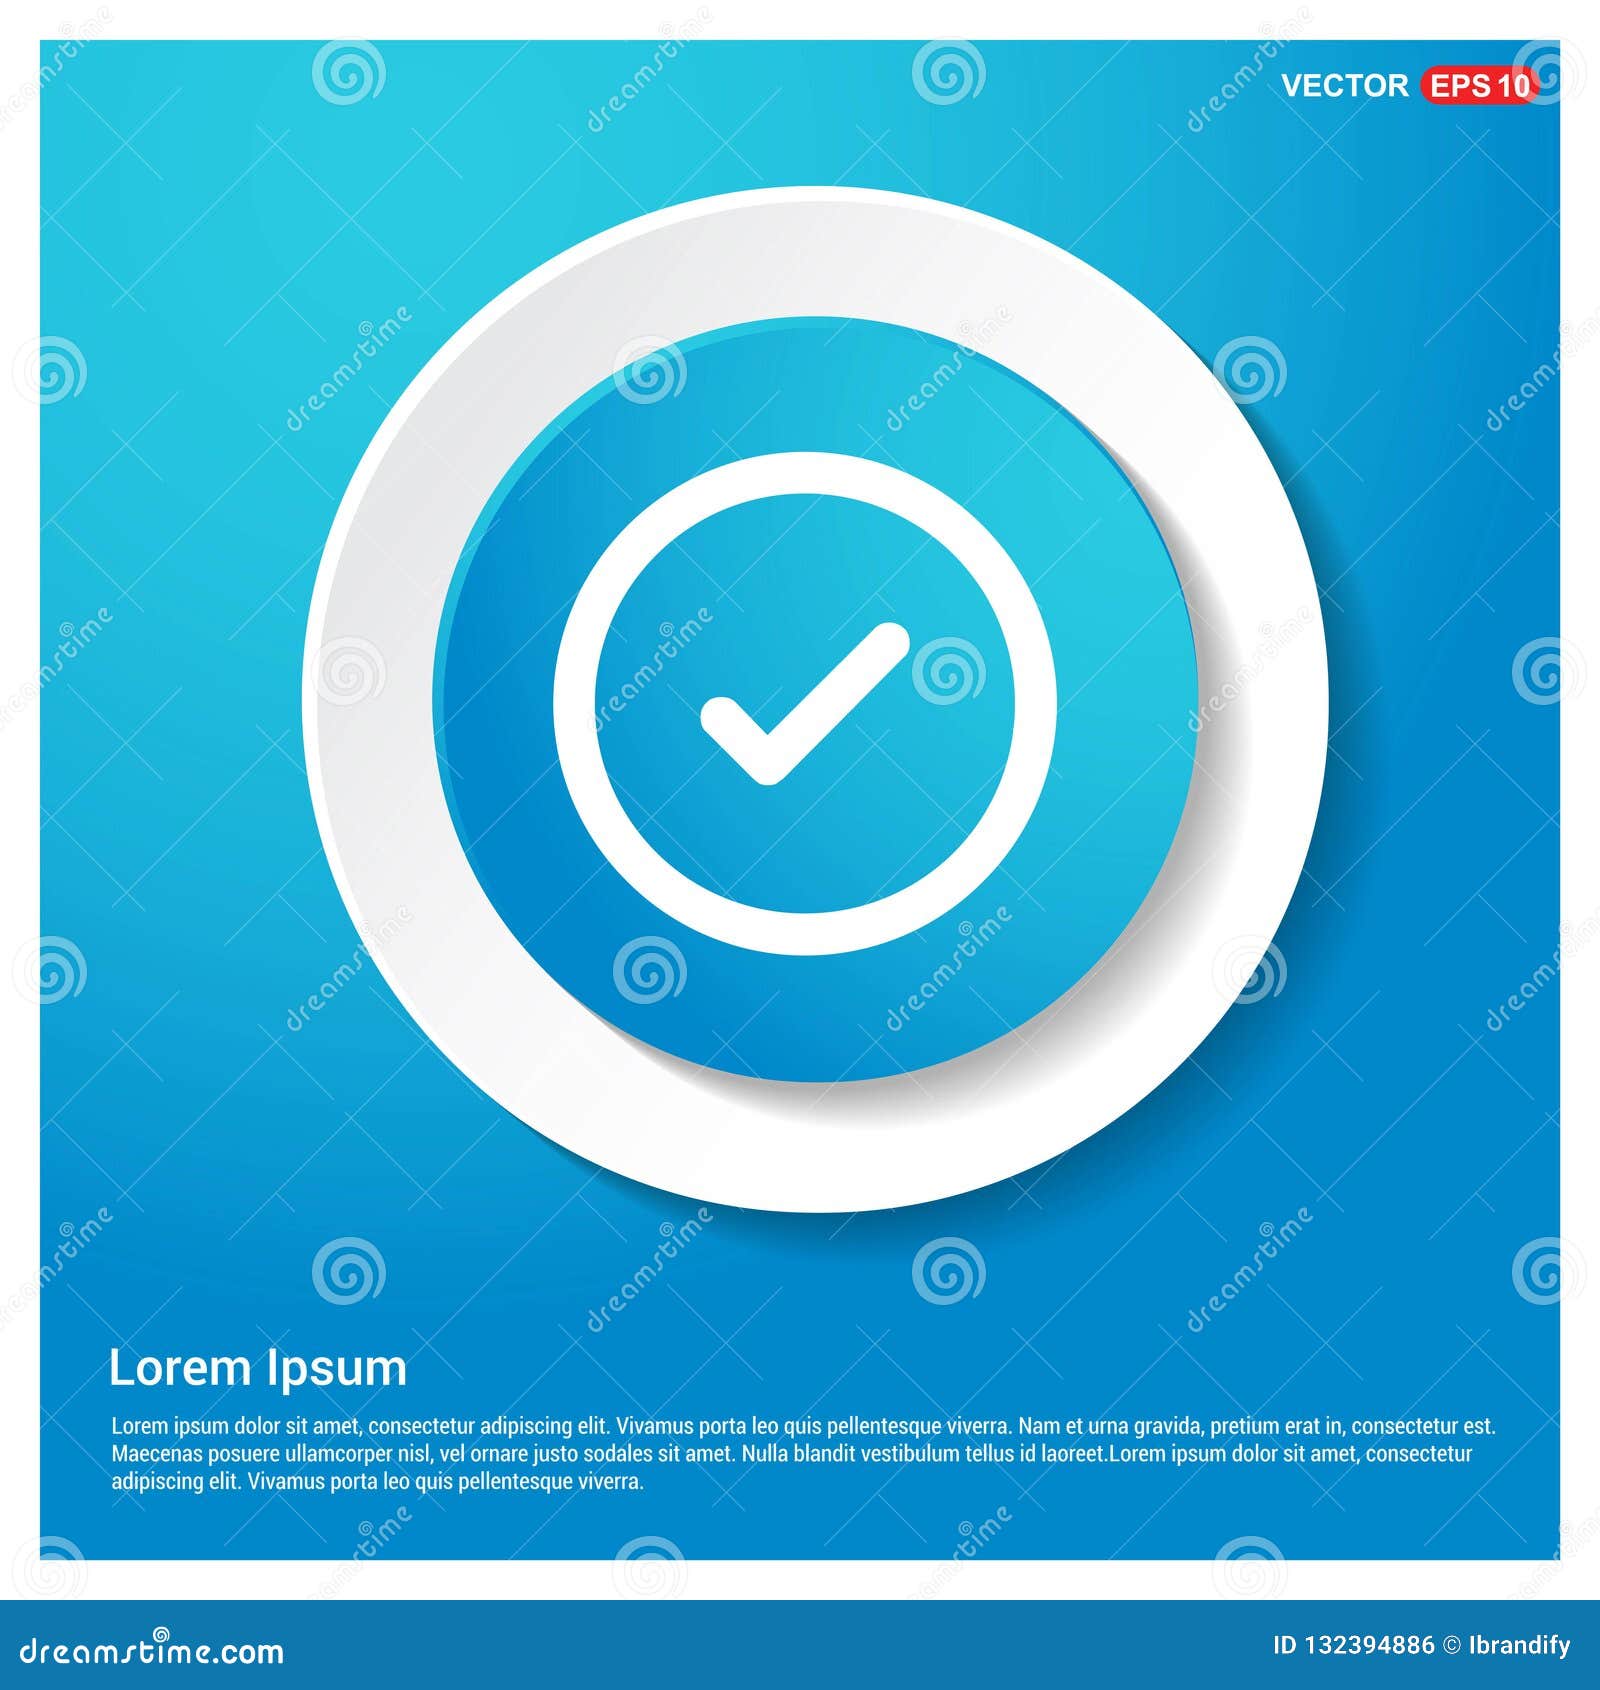 ok tick icon abstract blue web sticker button